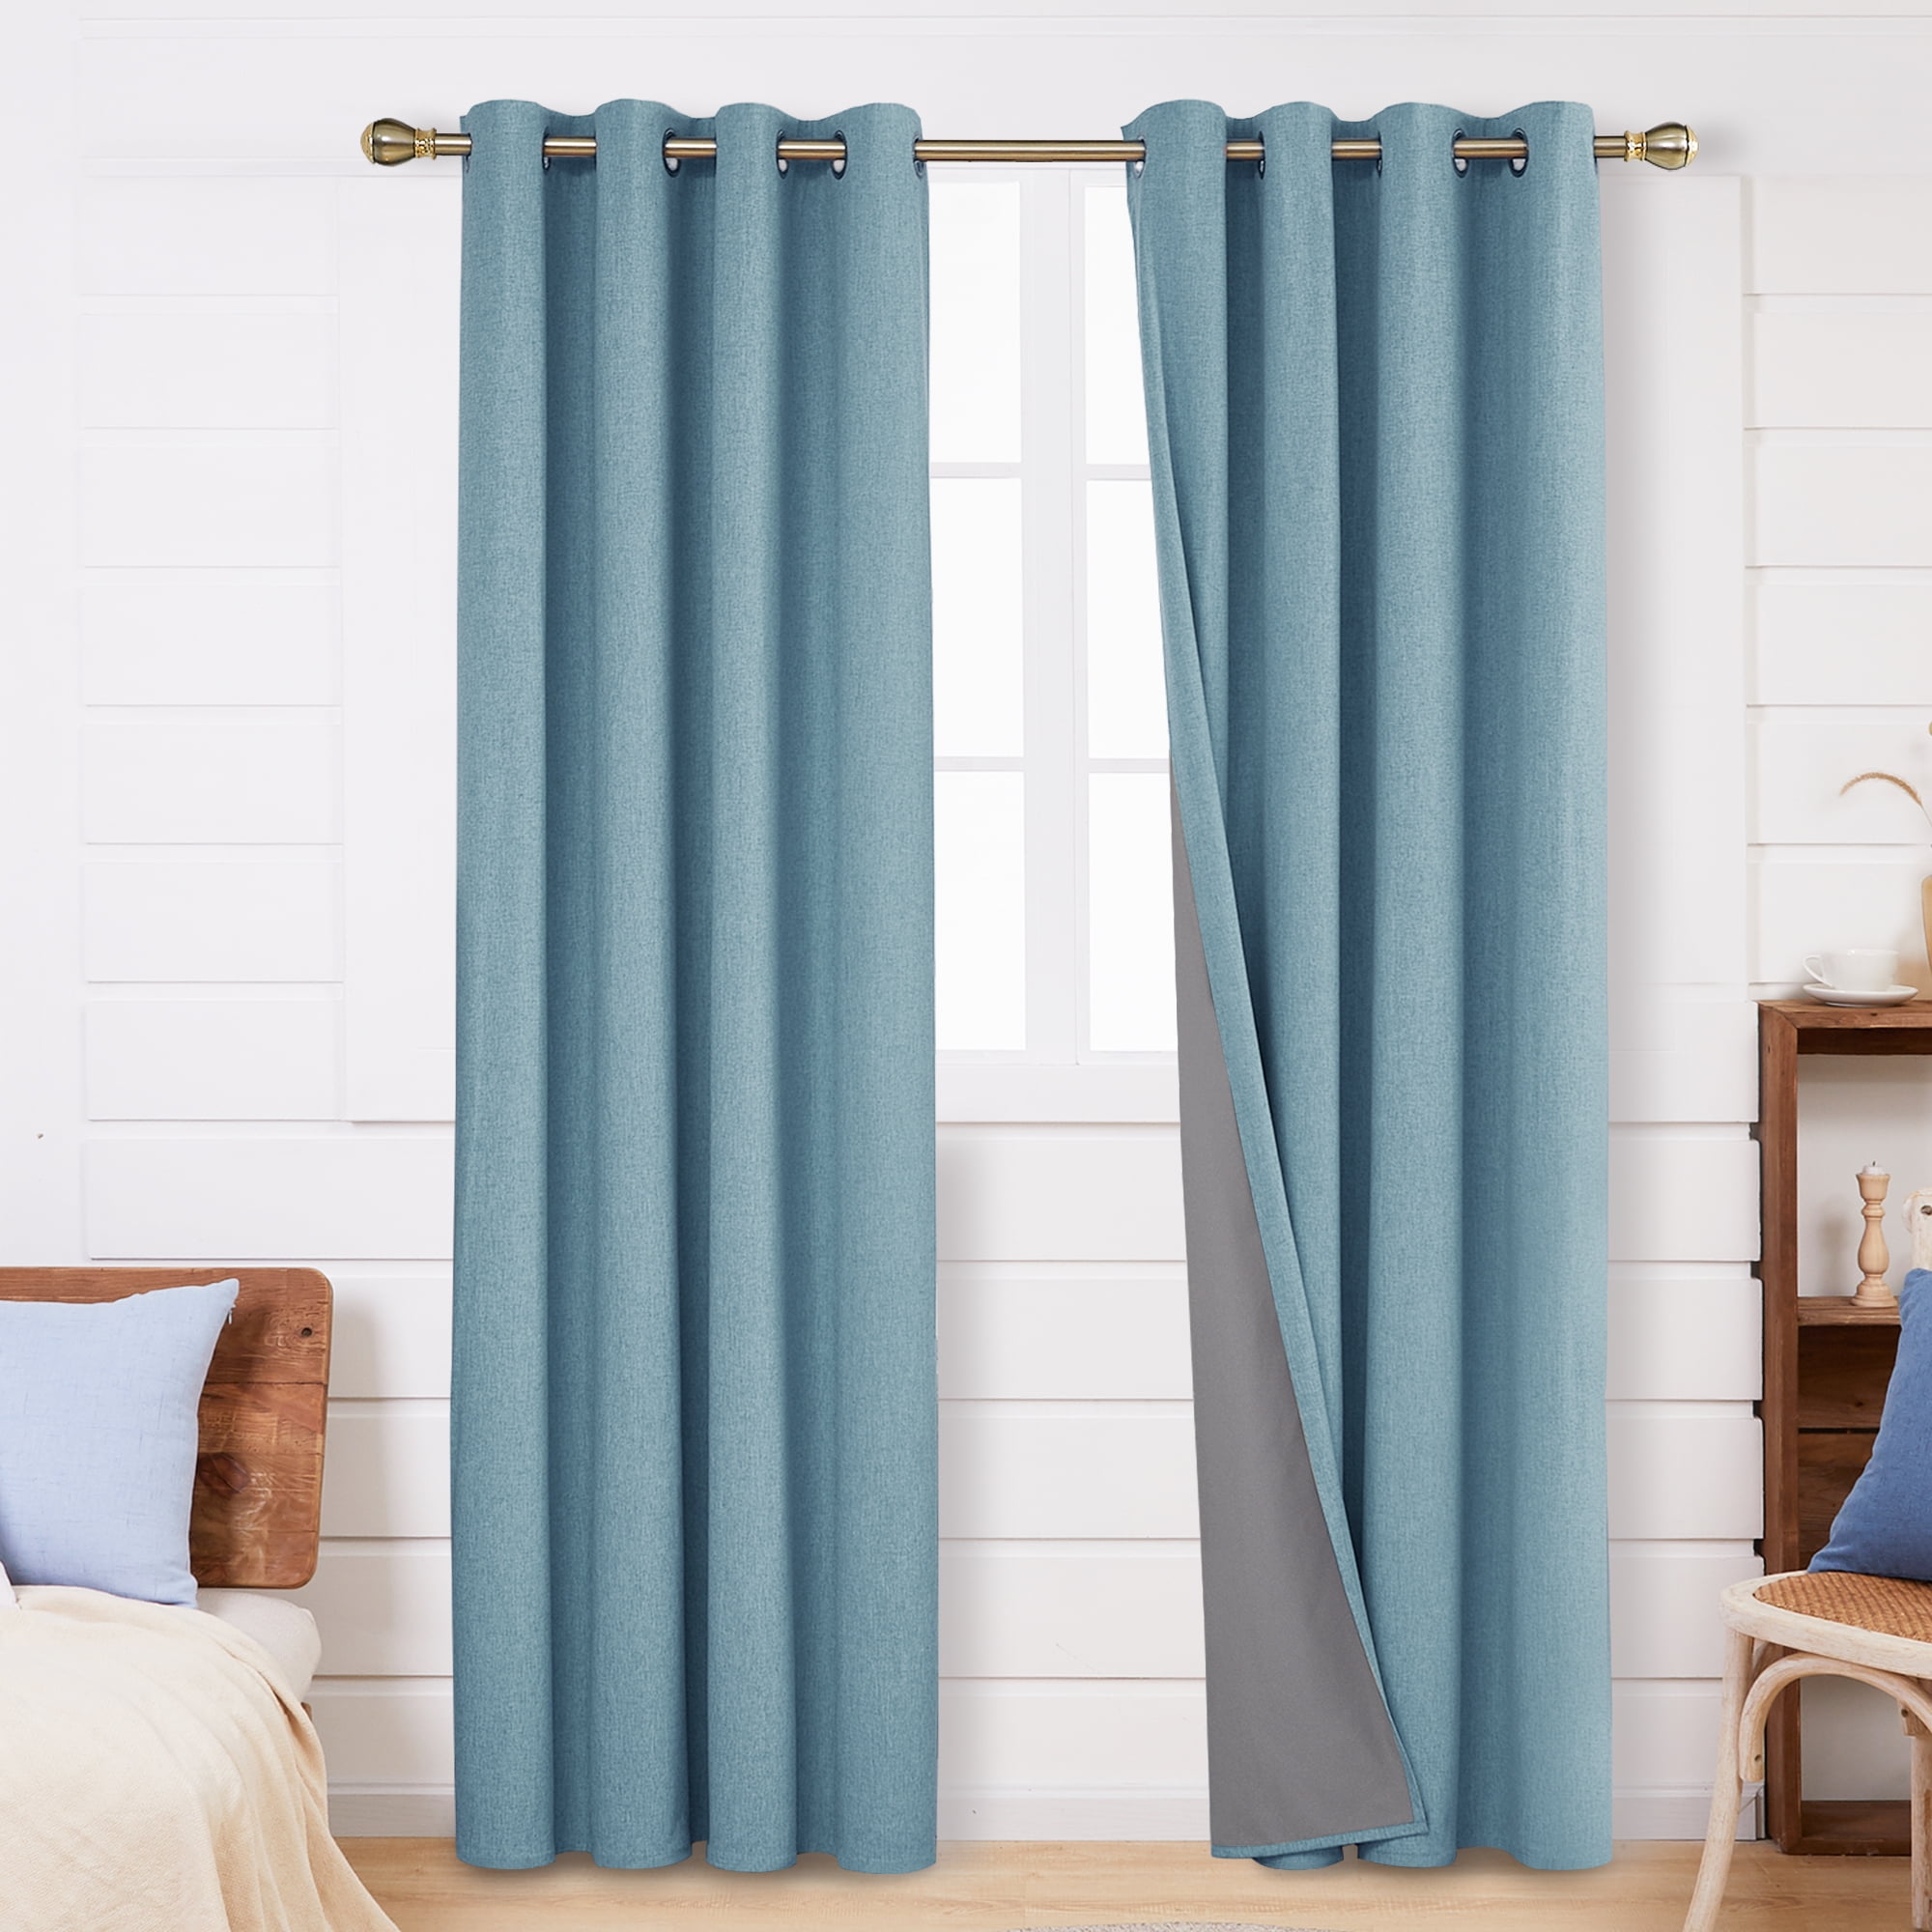 Details about   Vintage linen cotton slubby fabric abstract tones curtains drapery panels! 